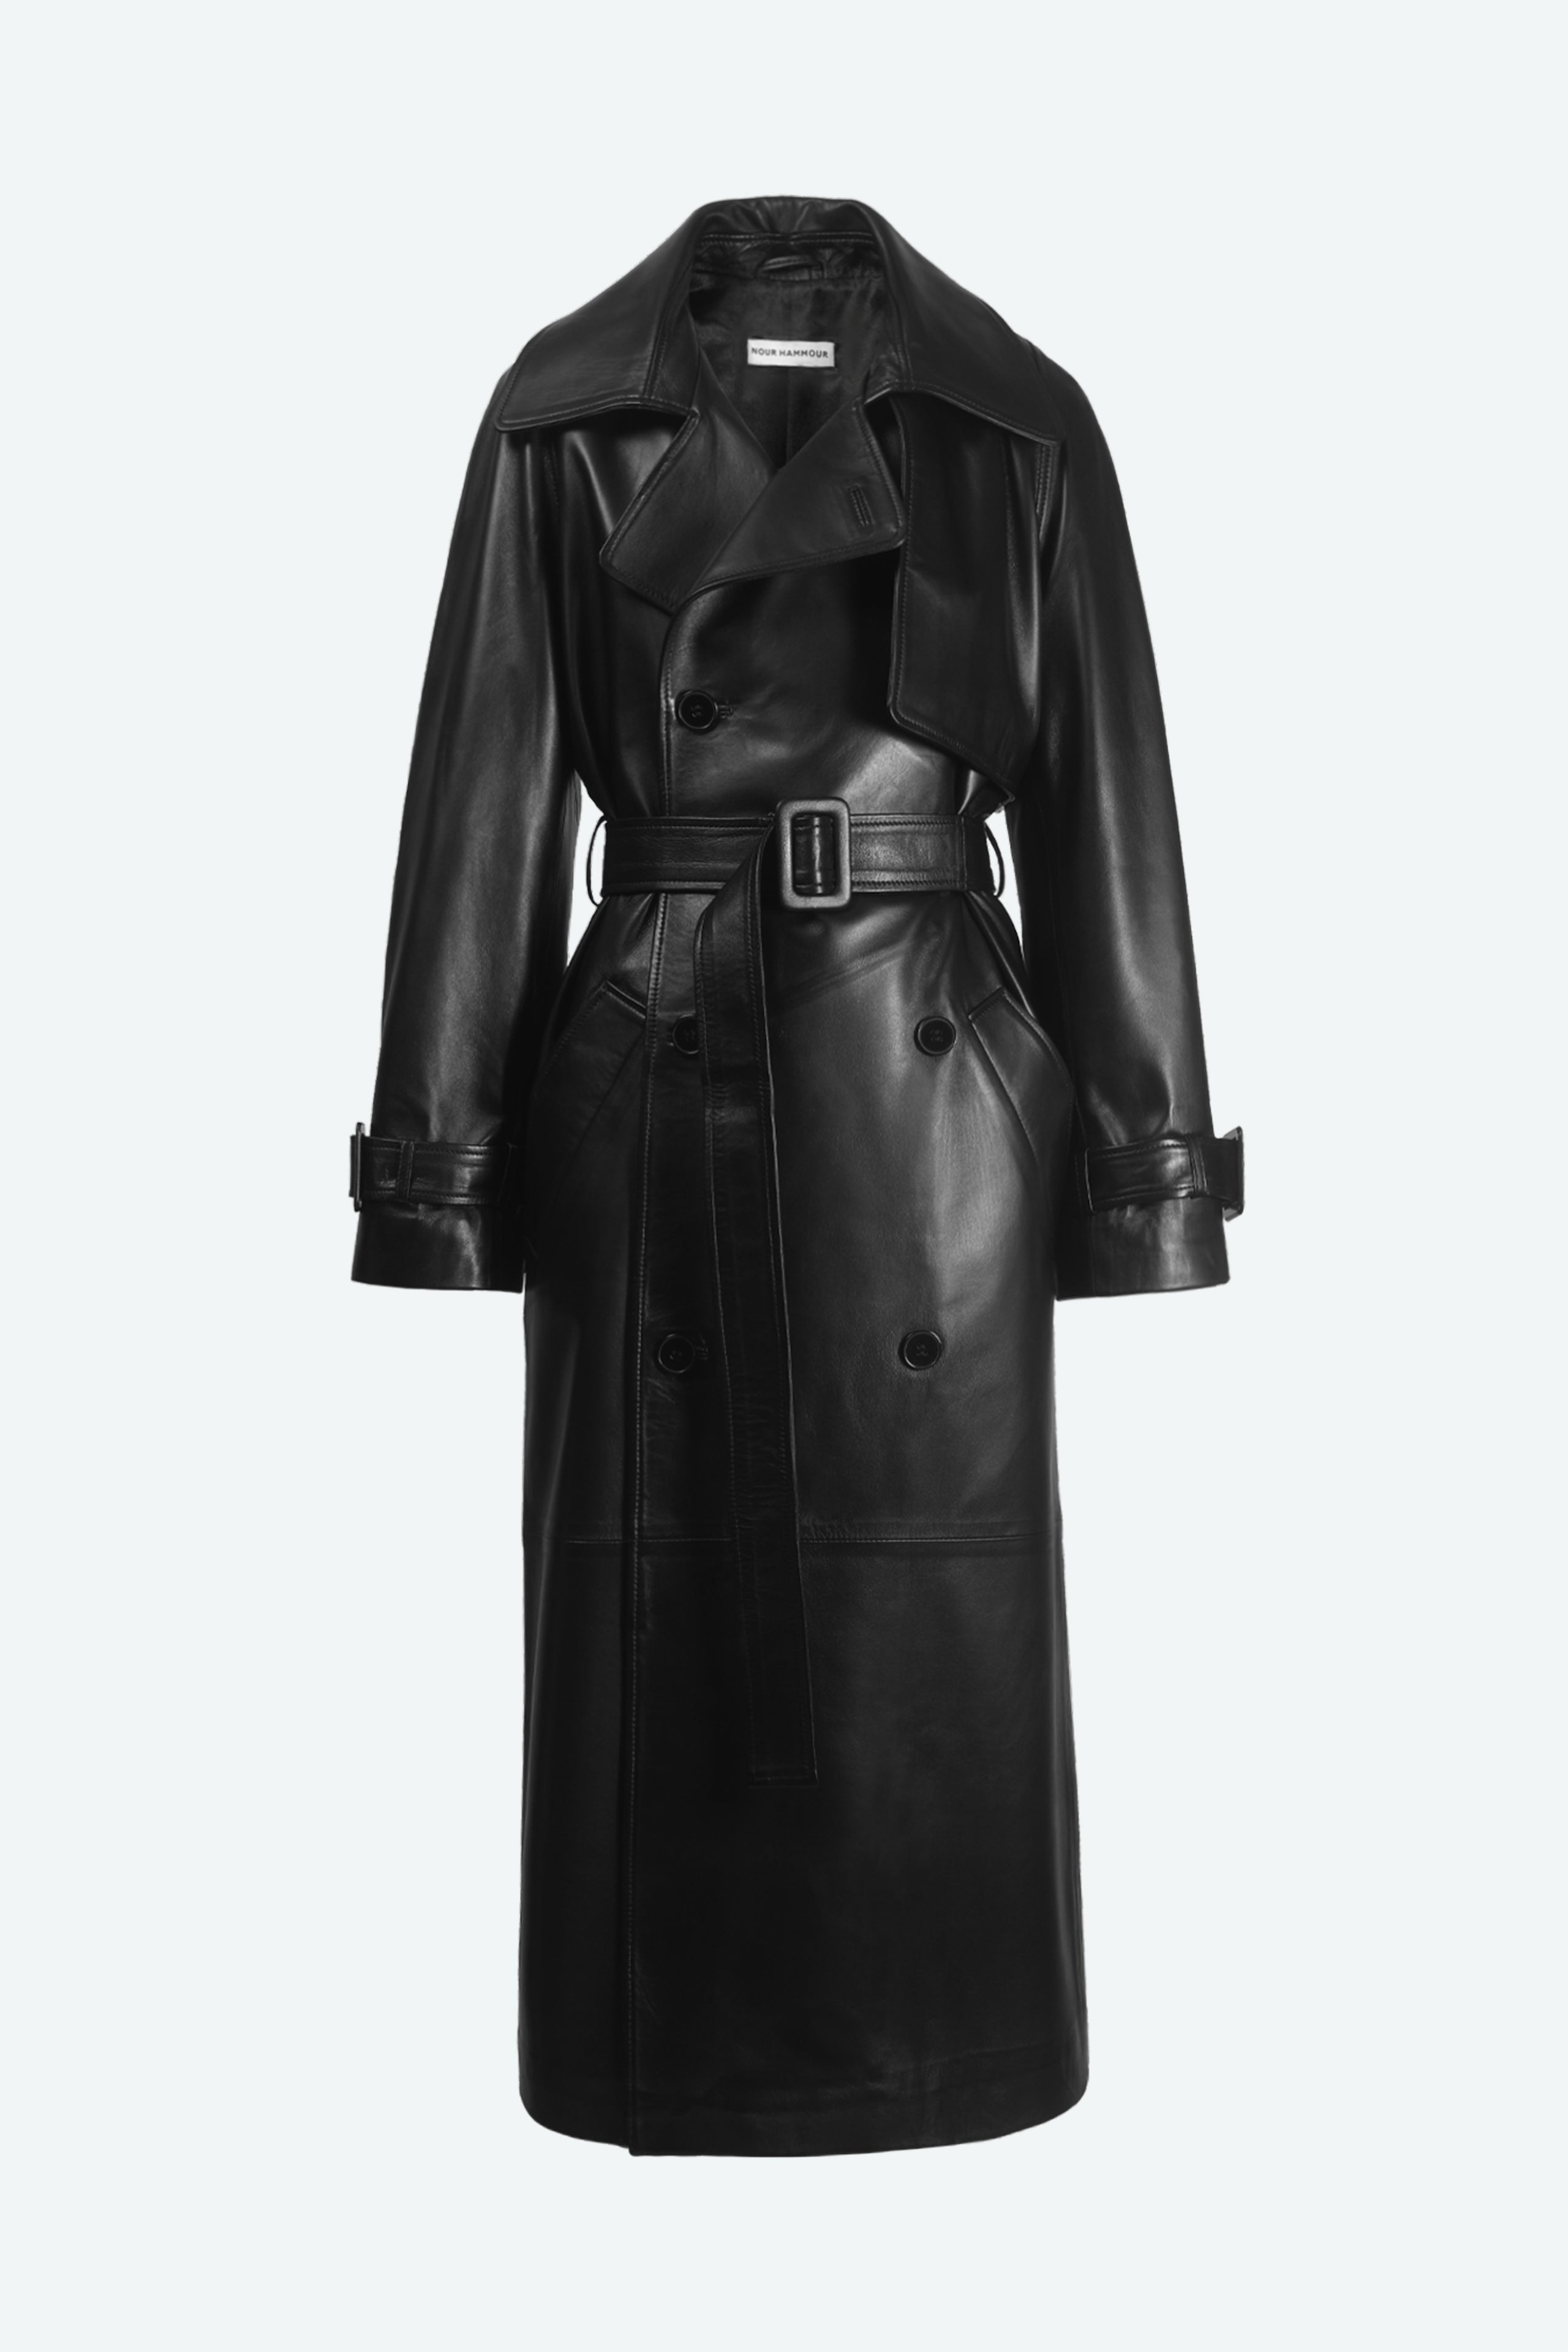 Henri Black Leather Trench Coat Packshot